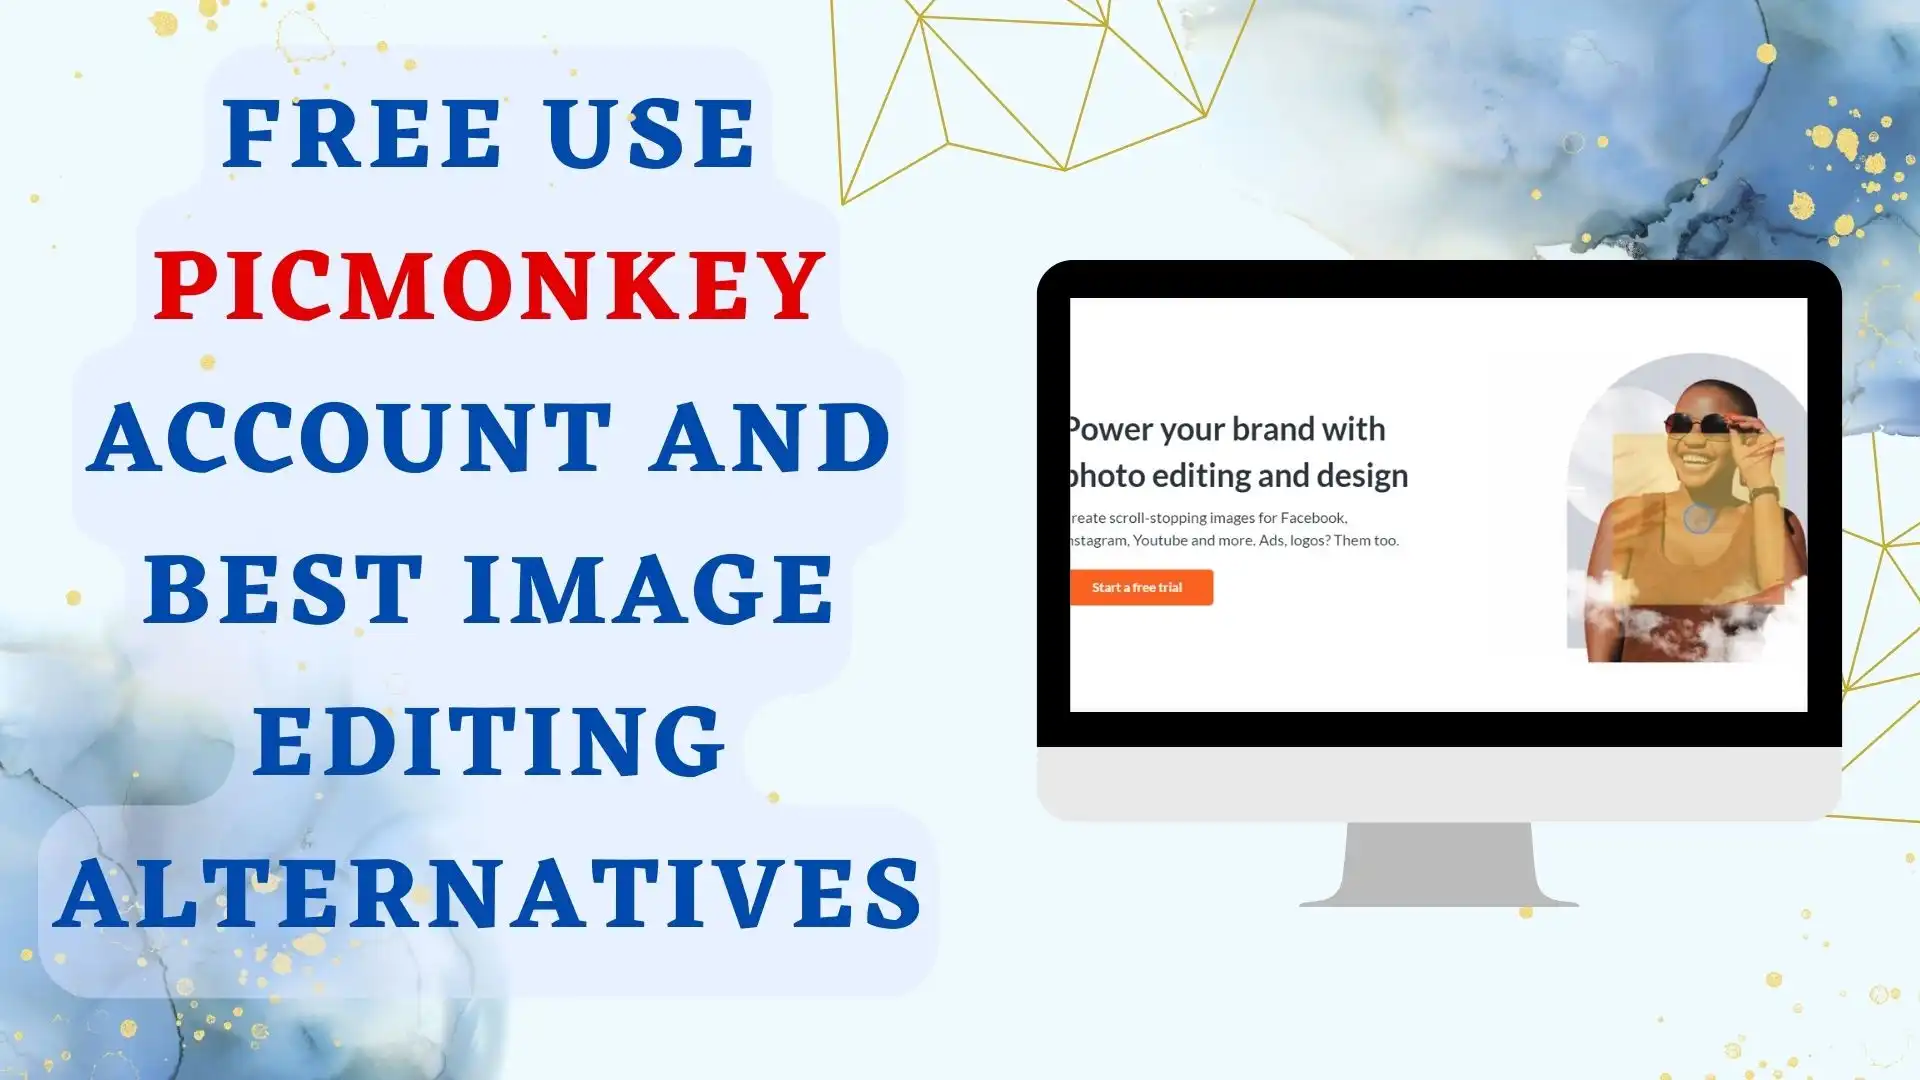 FREE Use PicMonkey Account and Best Image Editing Alternatives